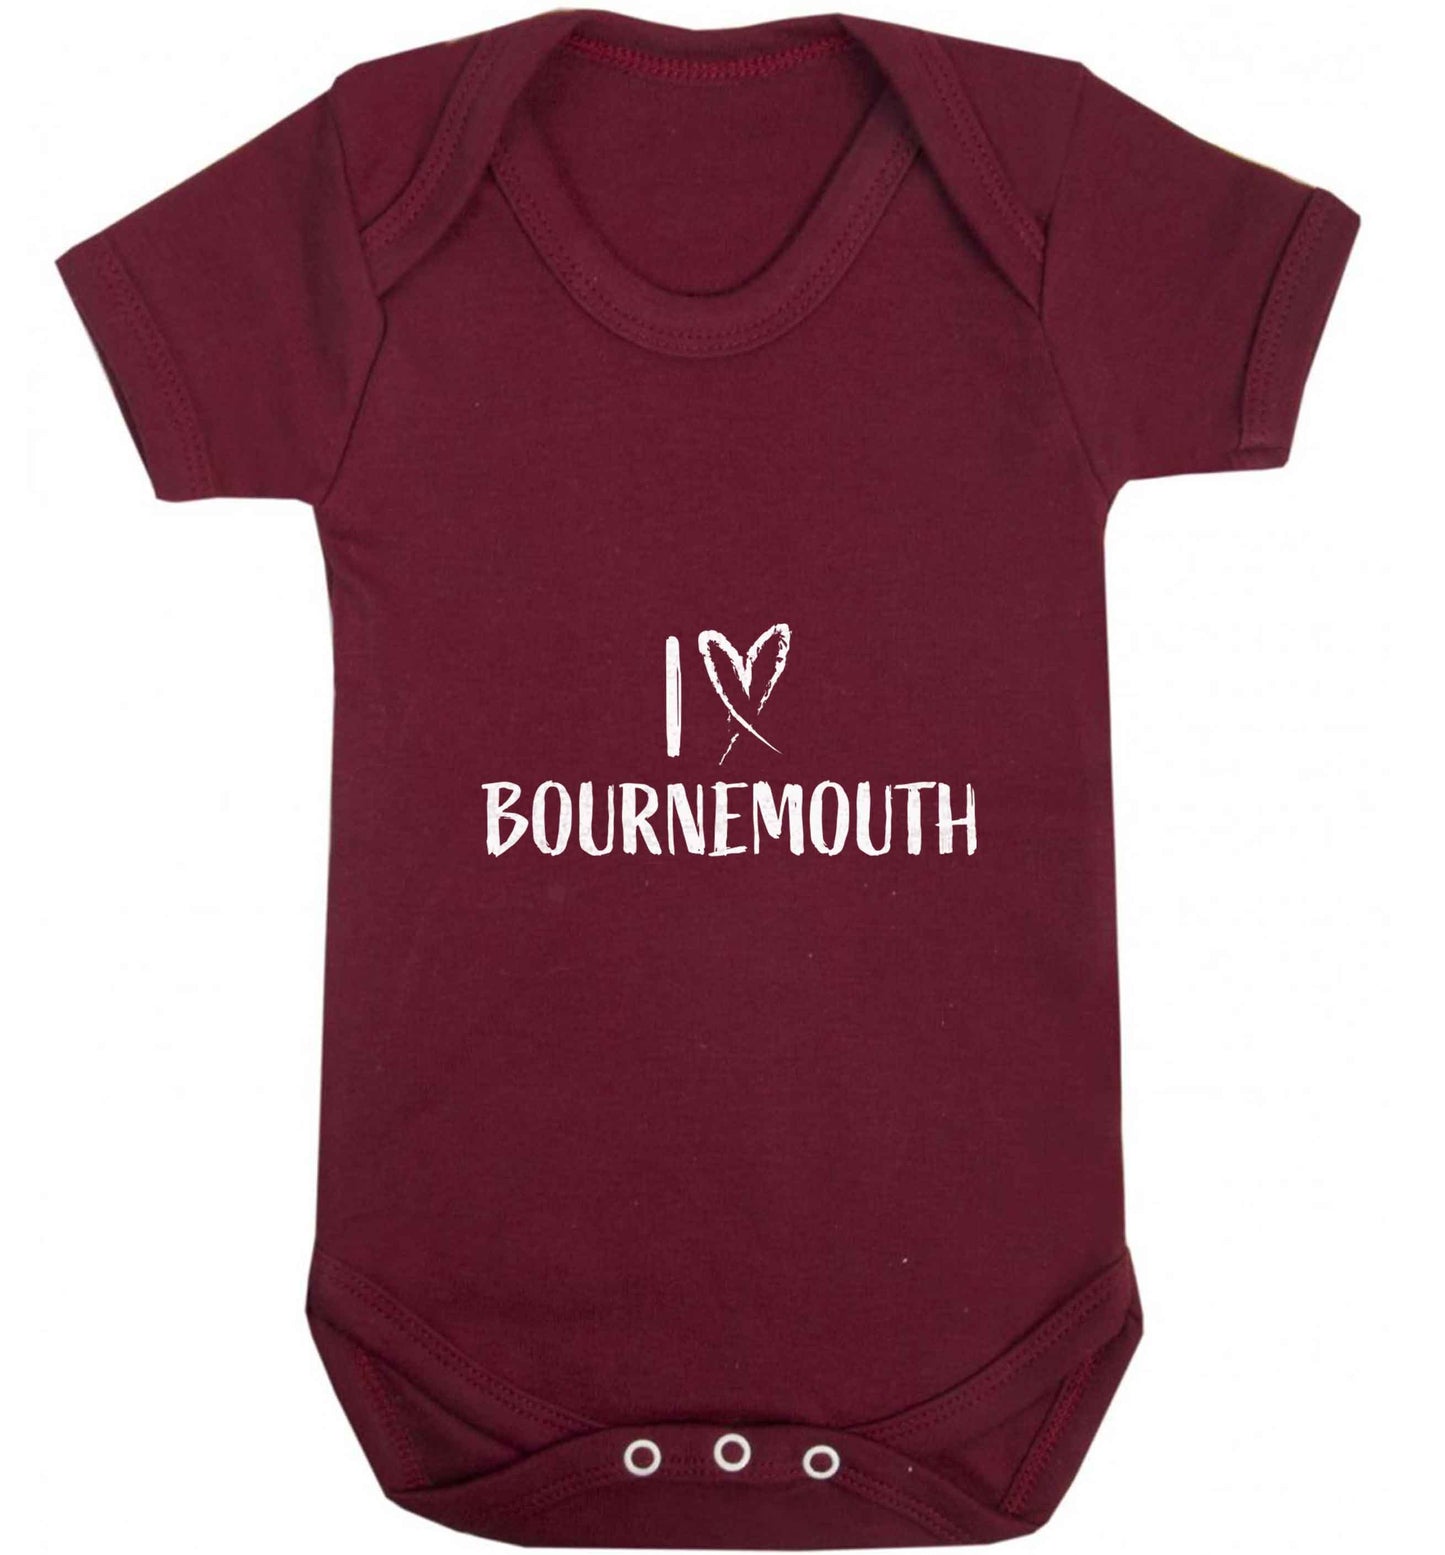 I love Bournemouth baby vest maroon 18-24 months